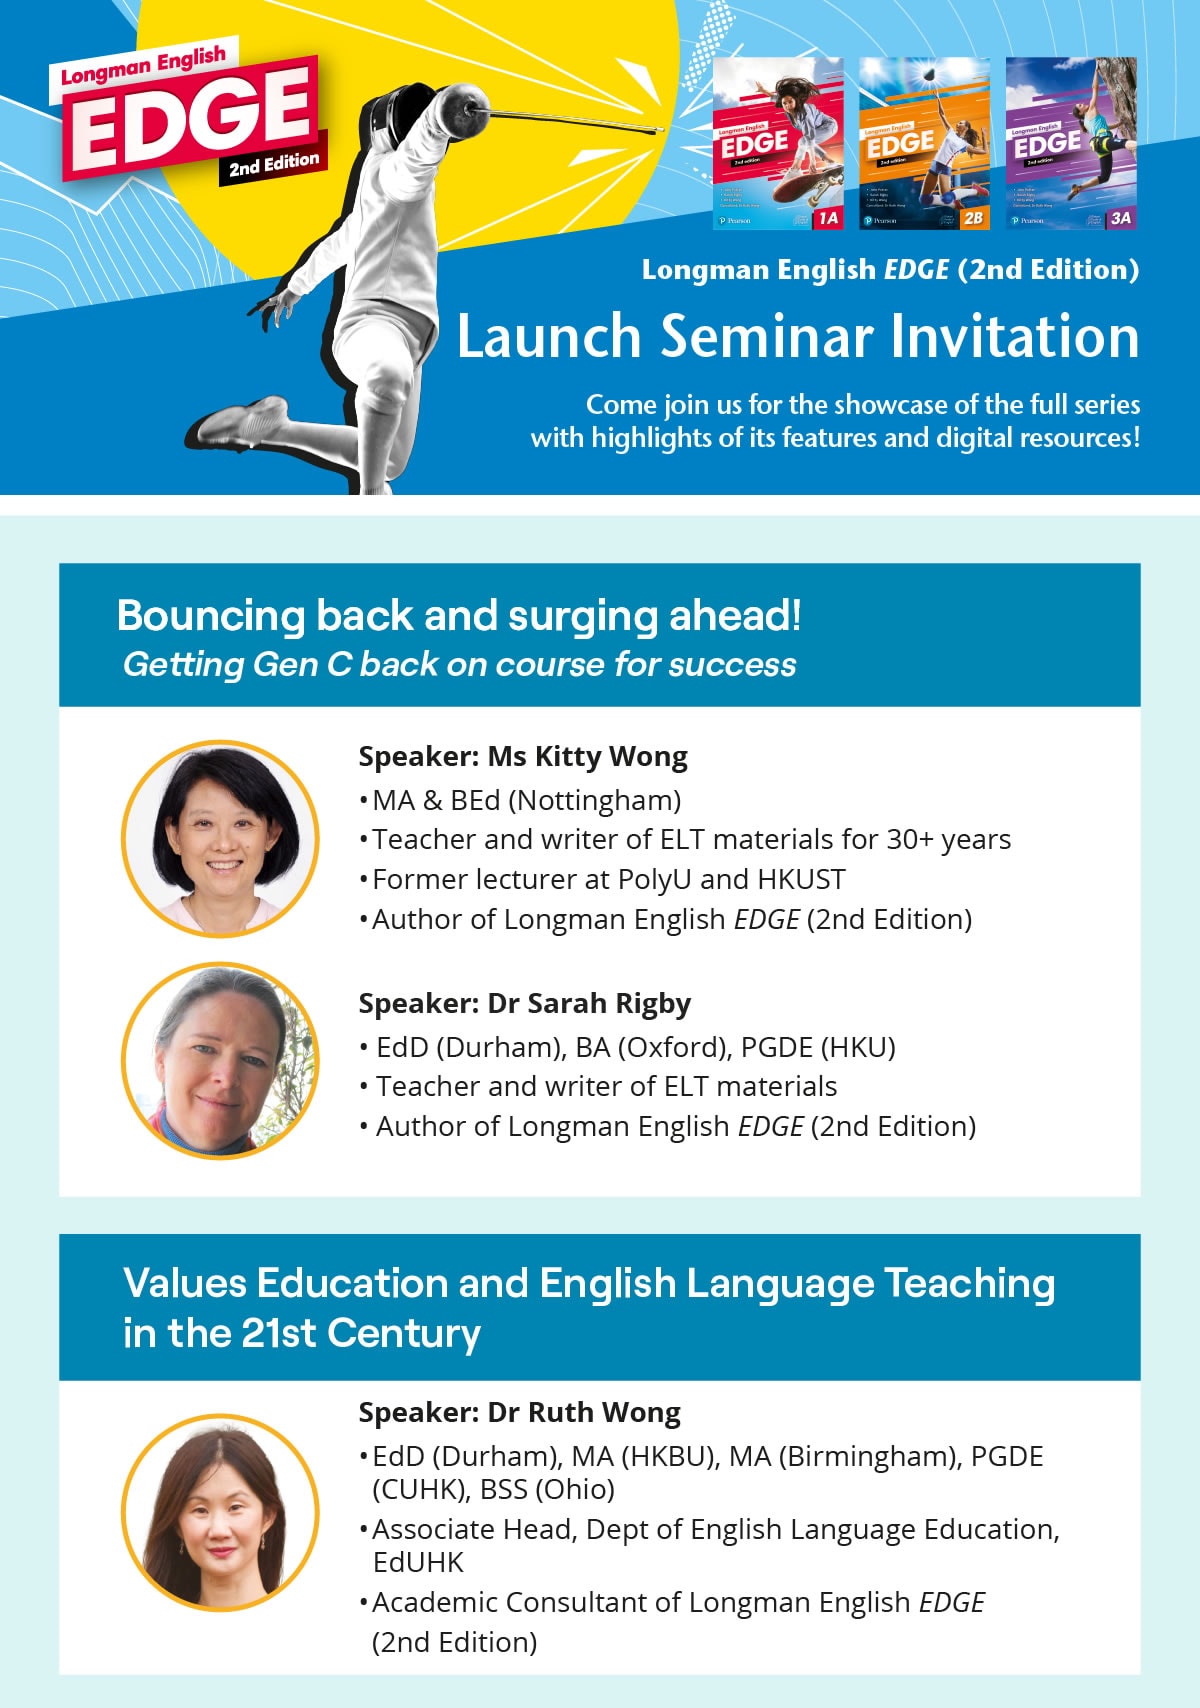 [Video playback] Launch Seminar of Longman English EDGE (2nd Edition)